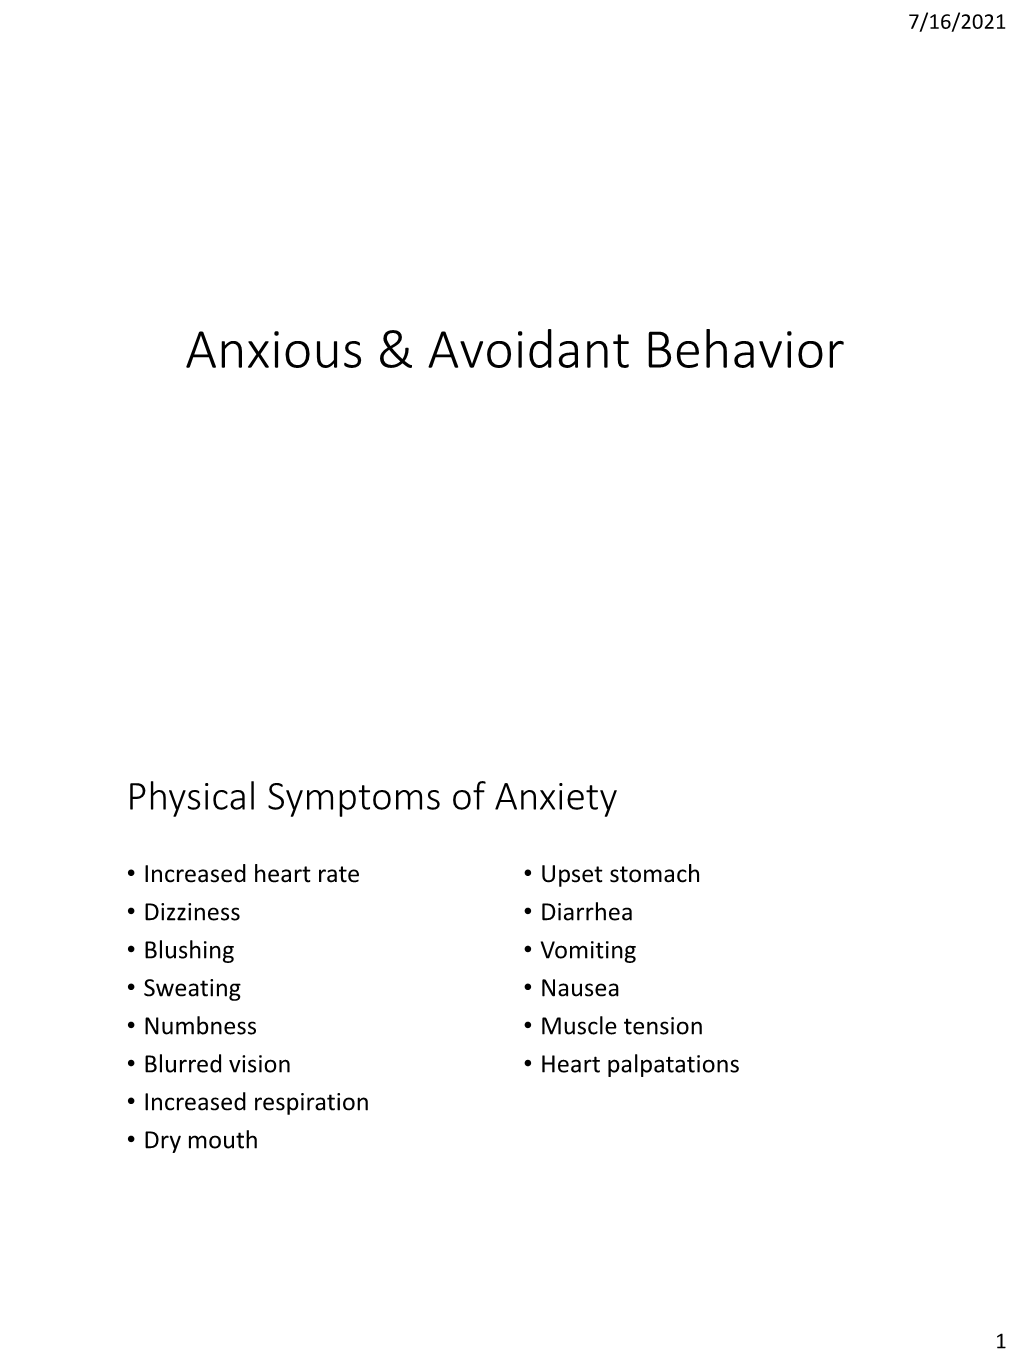 Anxious and Avoidant Behavior